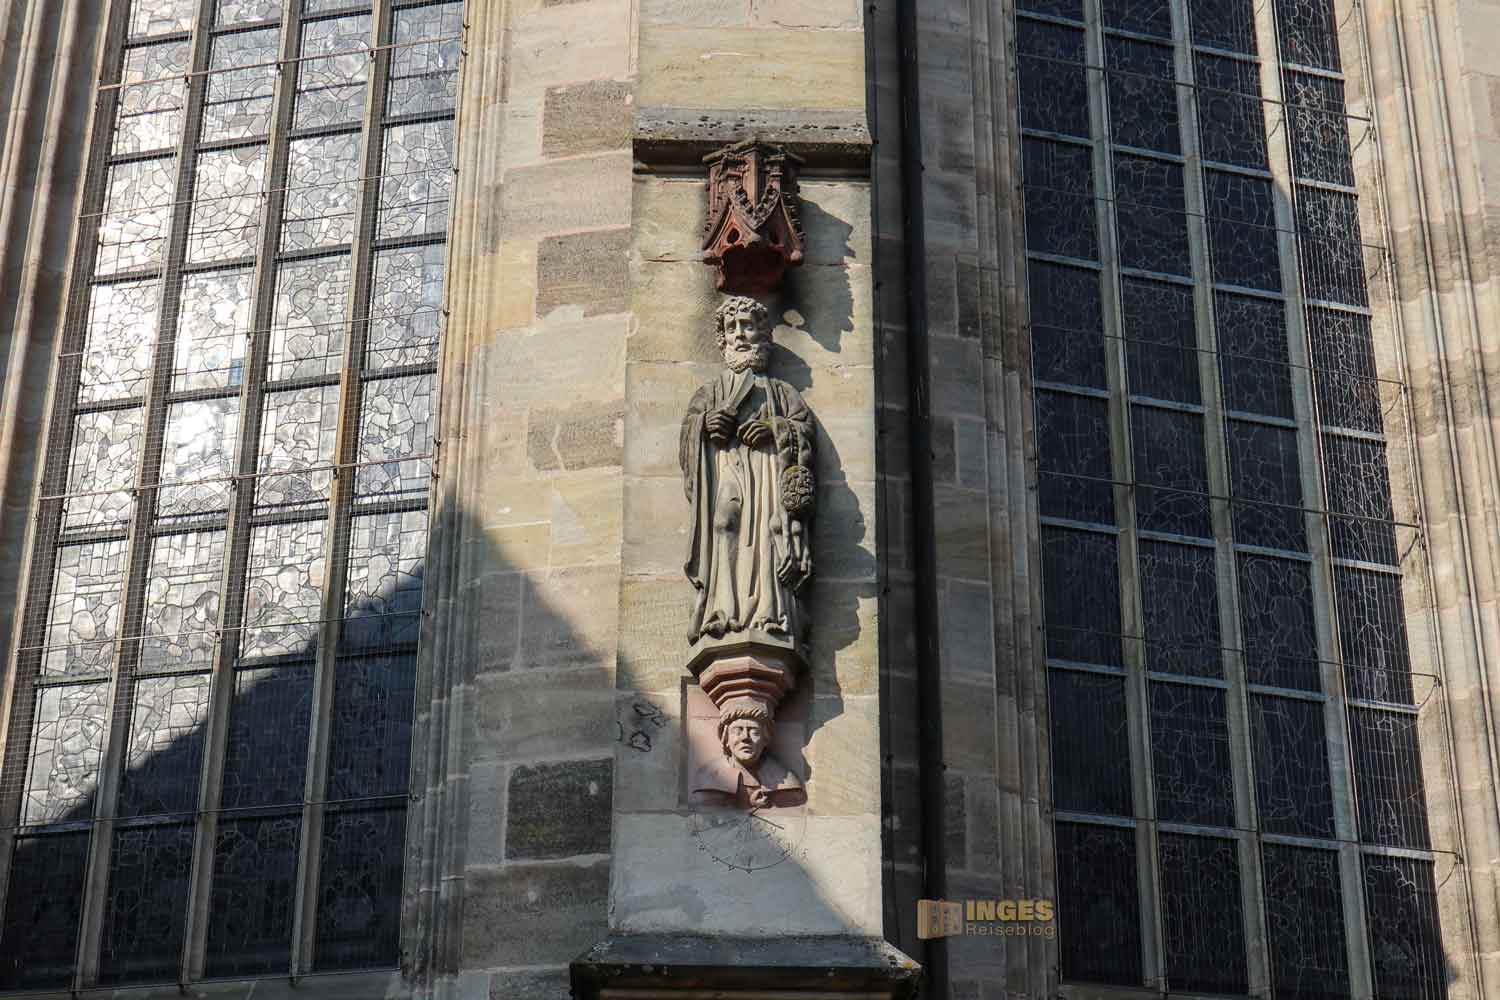 Münster St. Georg in Dinkelsbühl